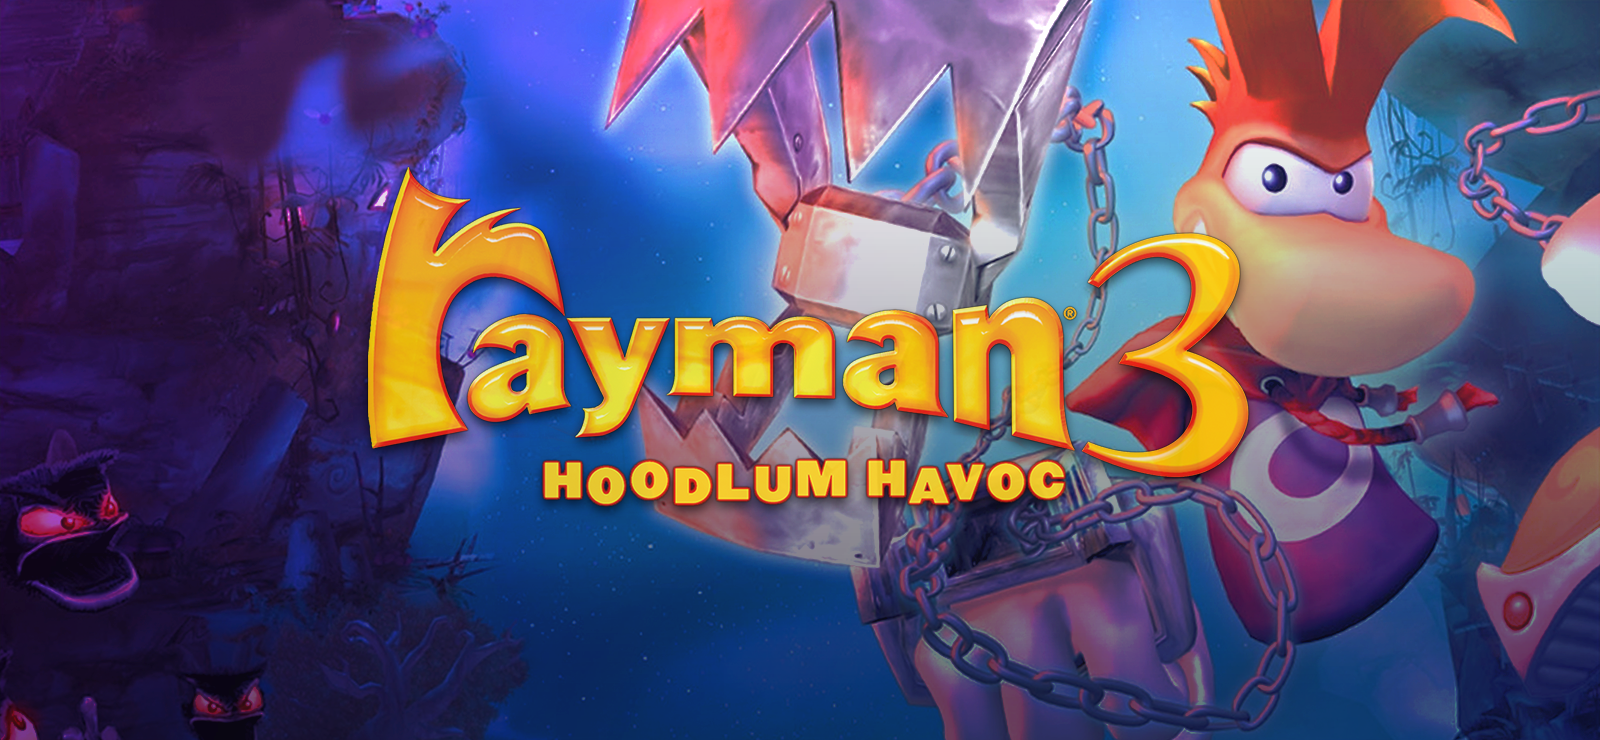 BESTSELLER - Rayman 3: Hoodlum Havoc